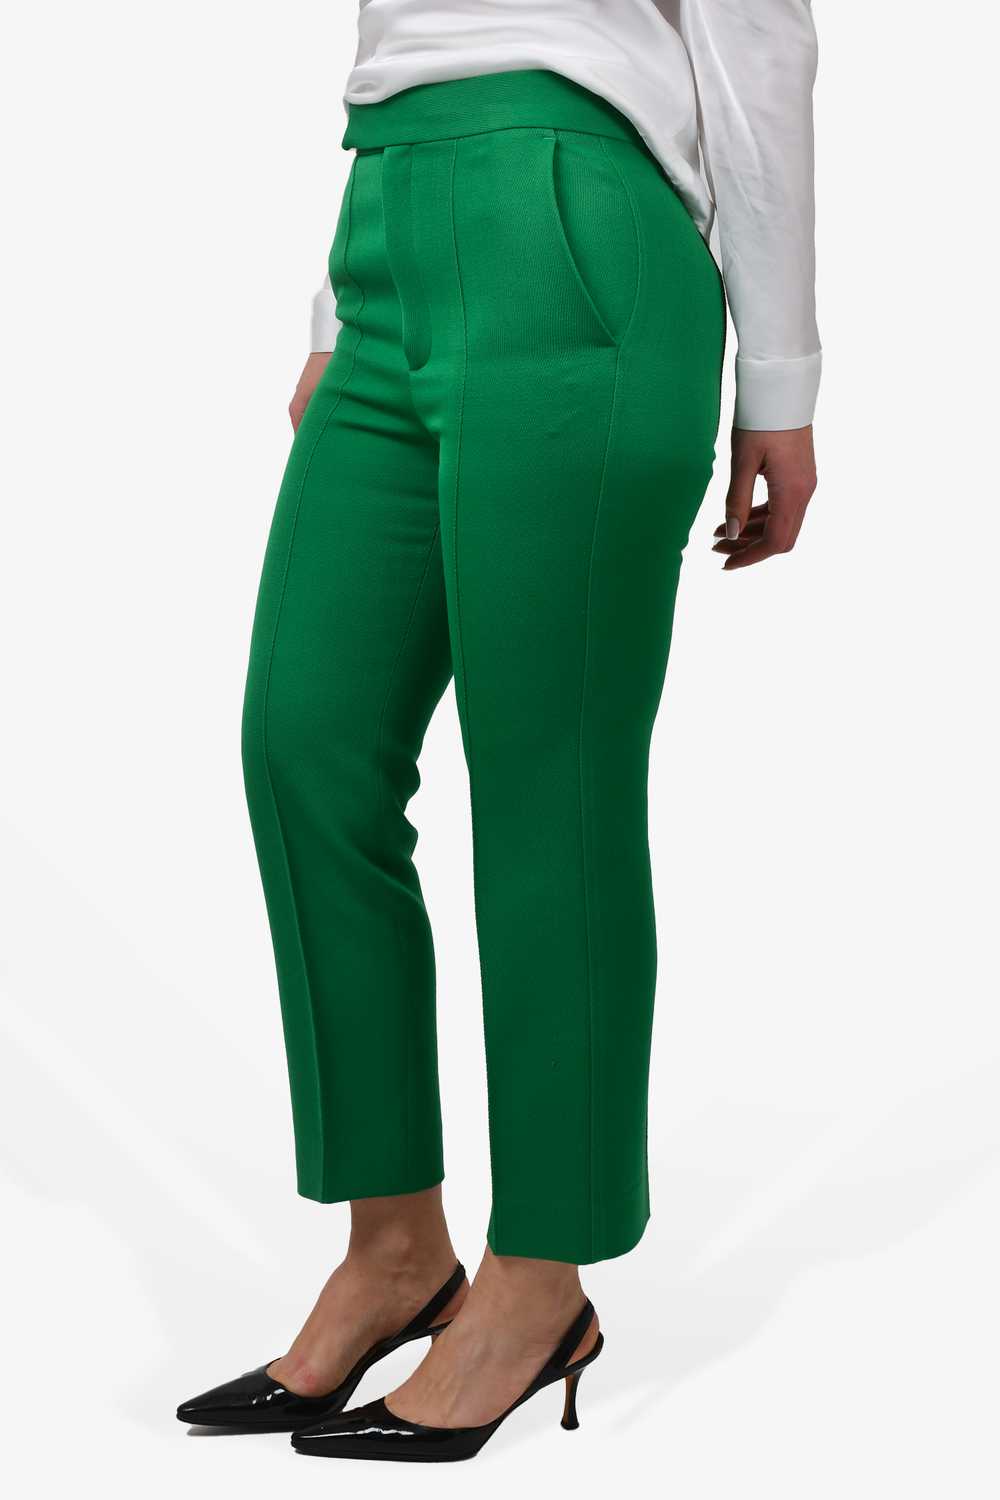 Celine Green Wool Straight Leg Trousers Size 34 - image 2